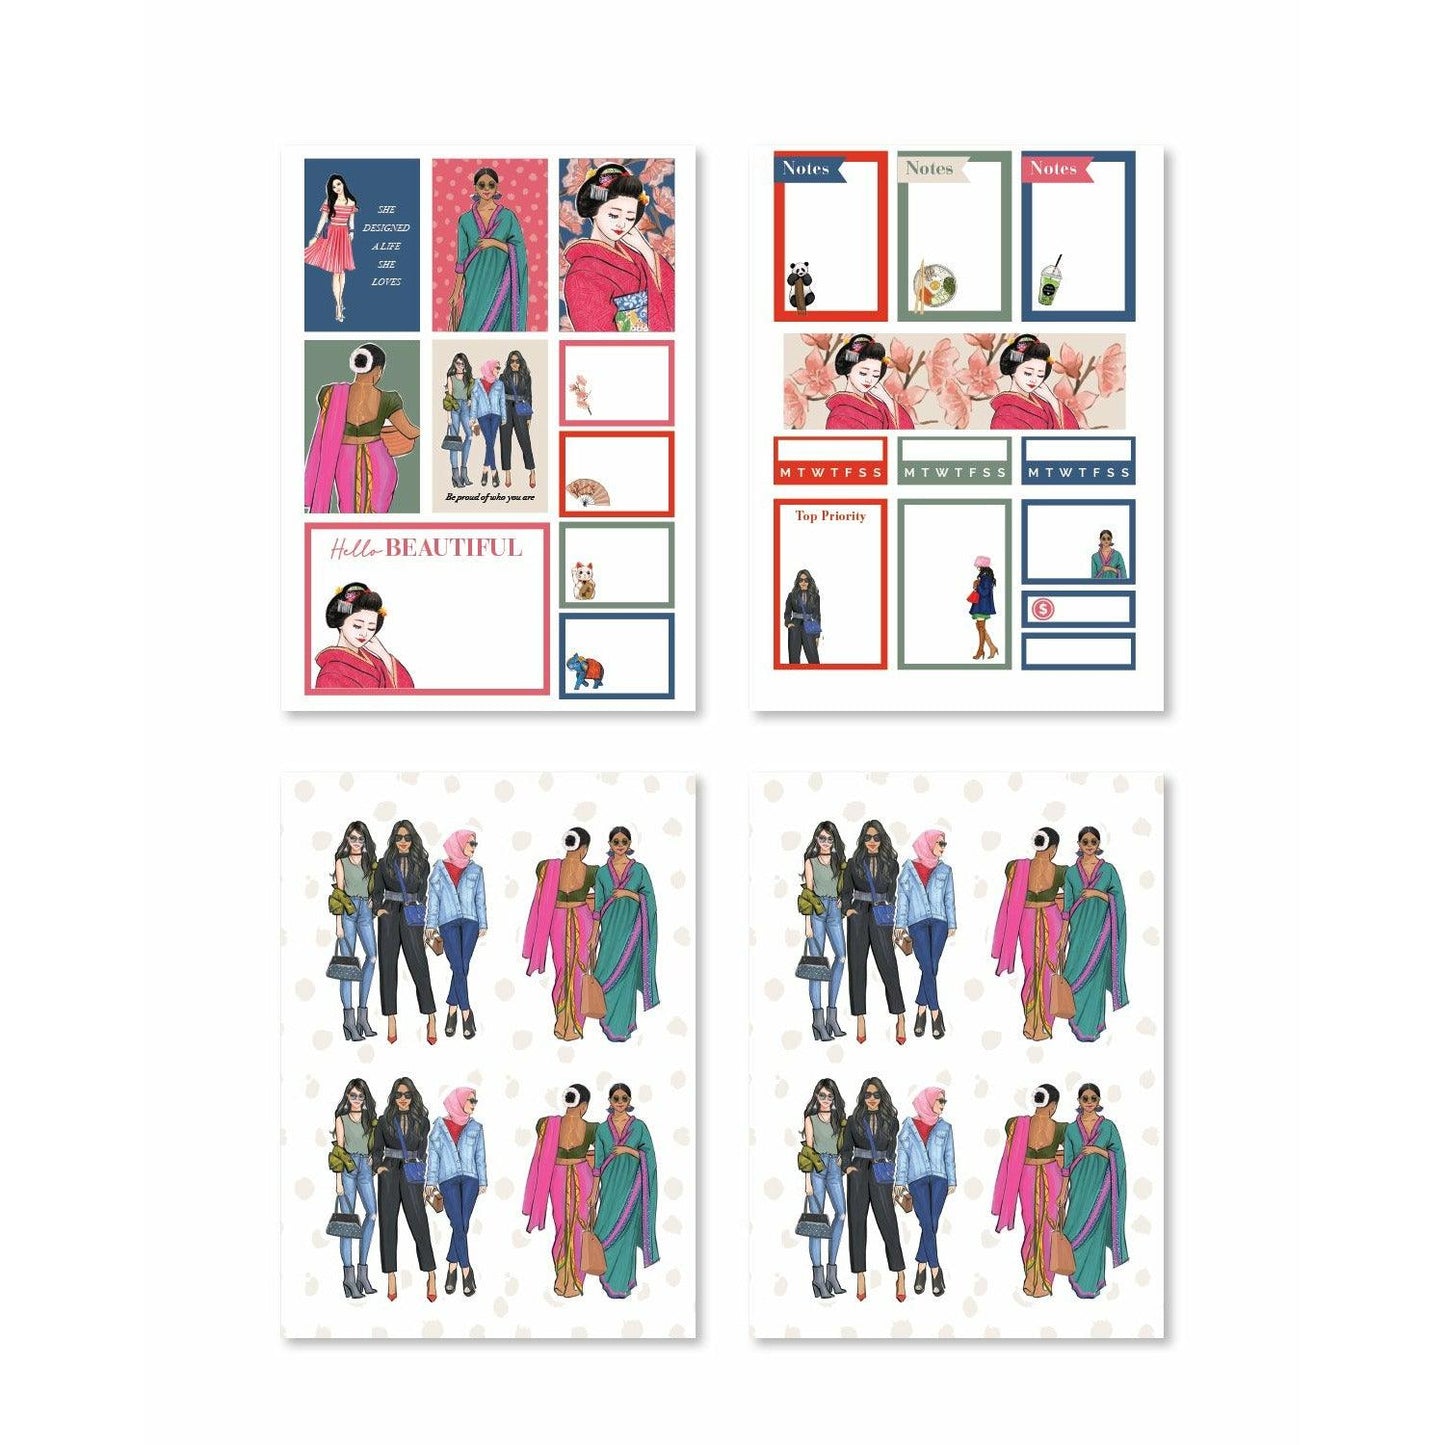 Asian Love Sticker Pack (Set of 6)